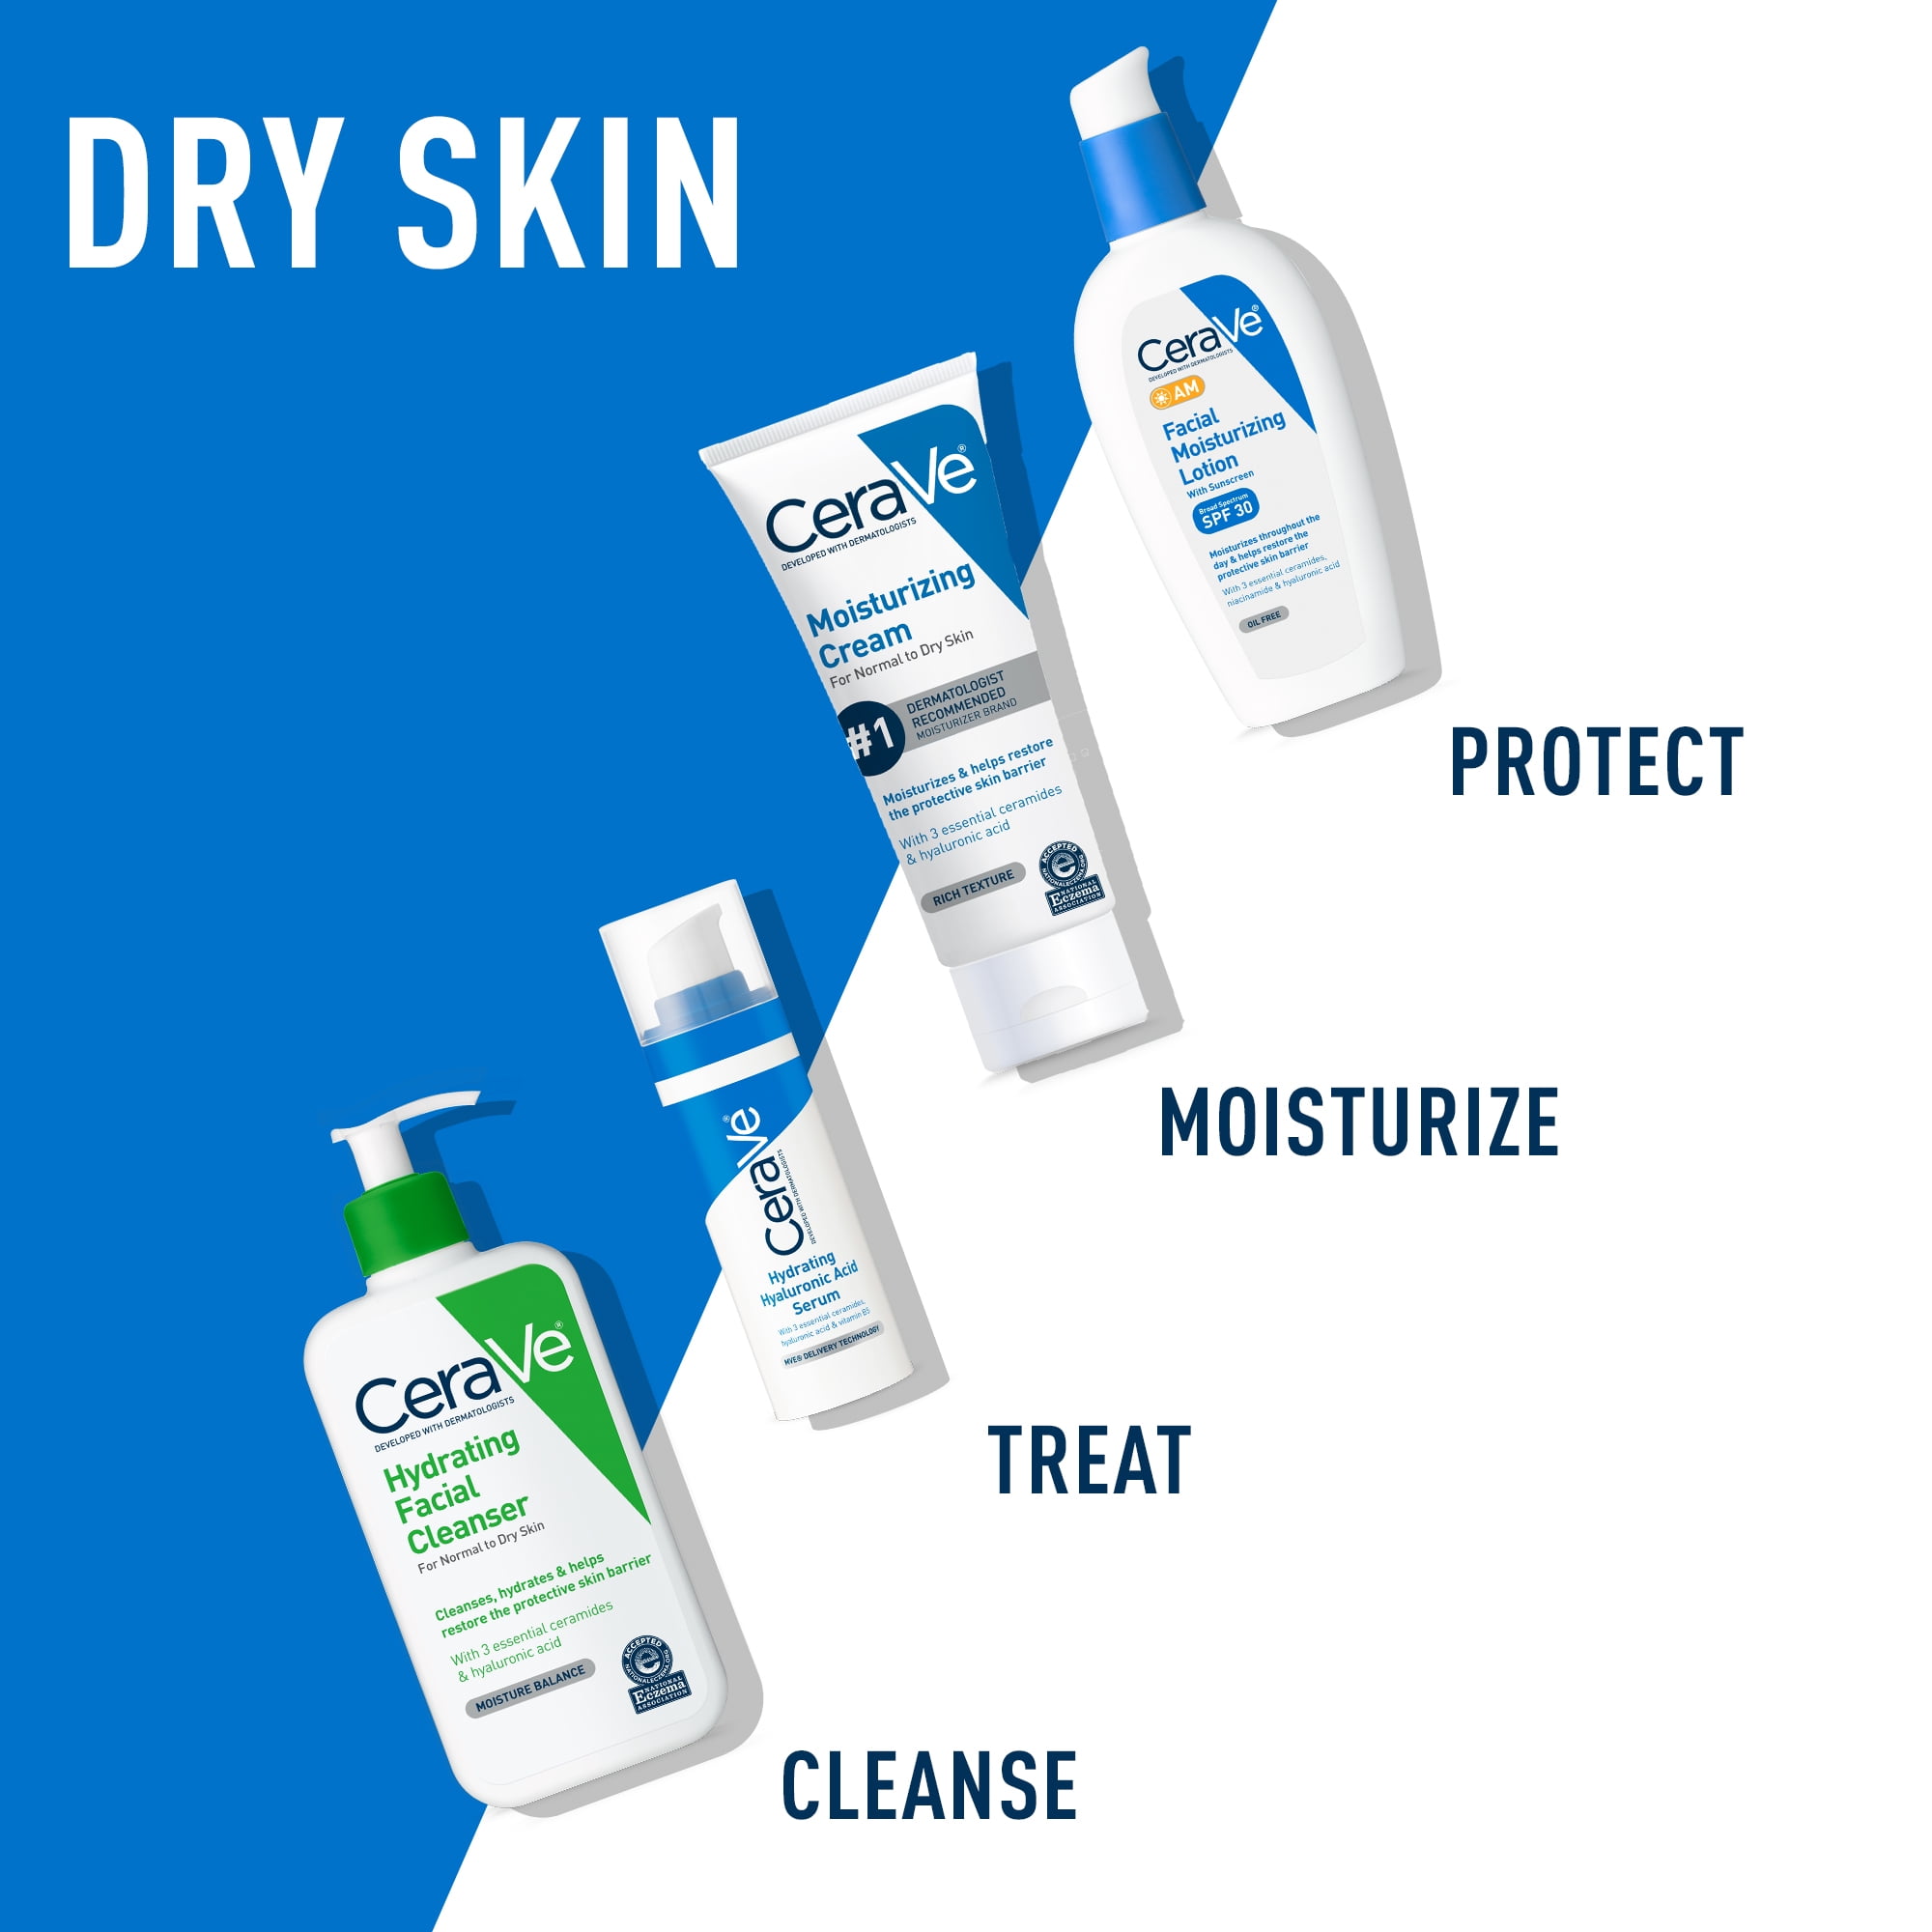 Egnet assimilation resultat CeraVe Moisturizing Cream for Face and Body, Moisturizer for Normal to Dry  SKin, 8 oz. - Walmart.com